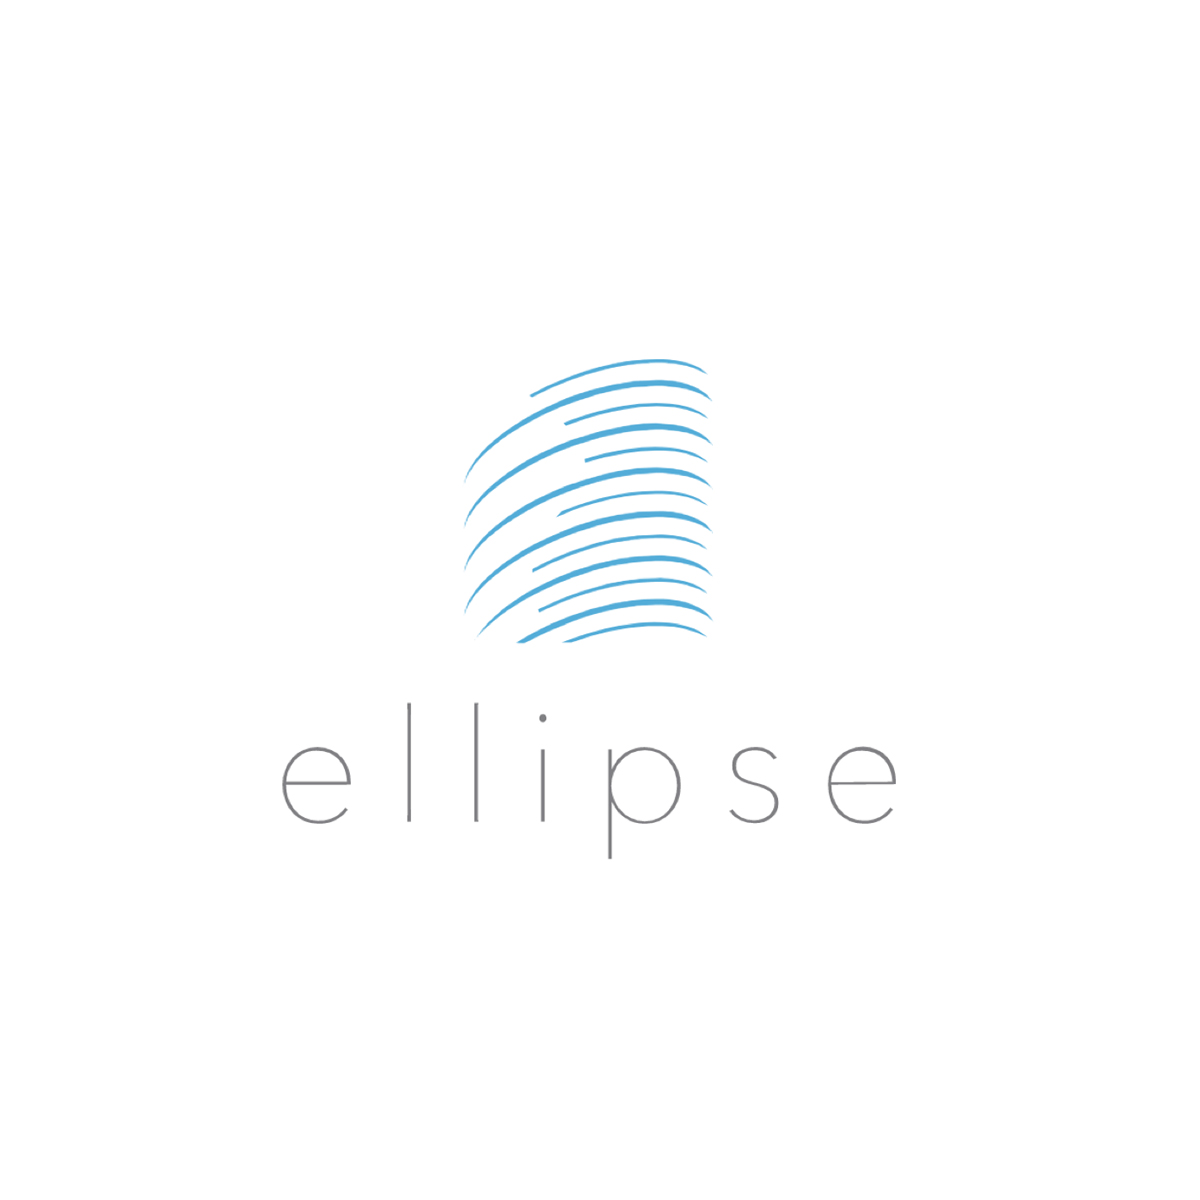 Ellipse Logo - Blue and White